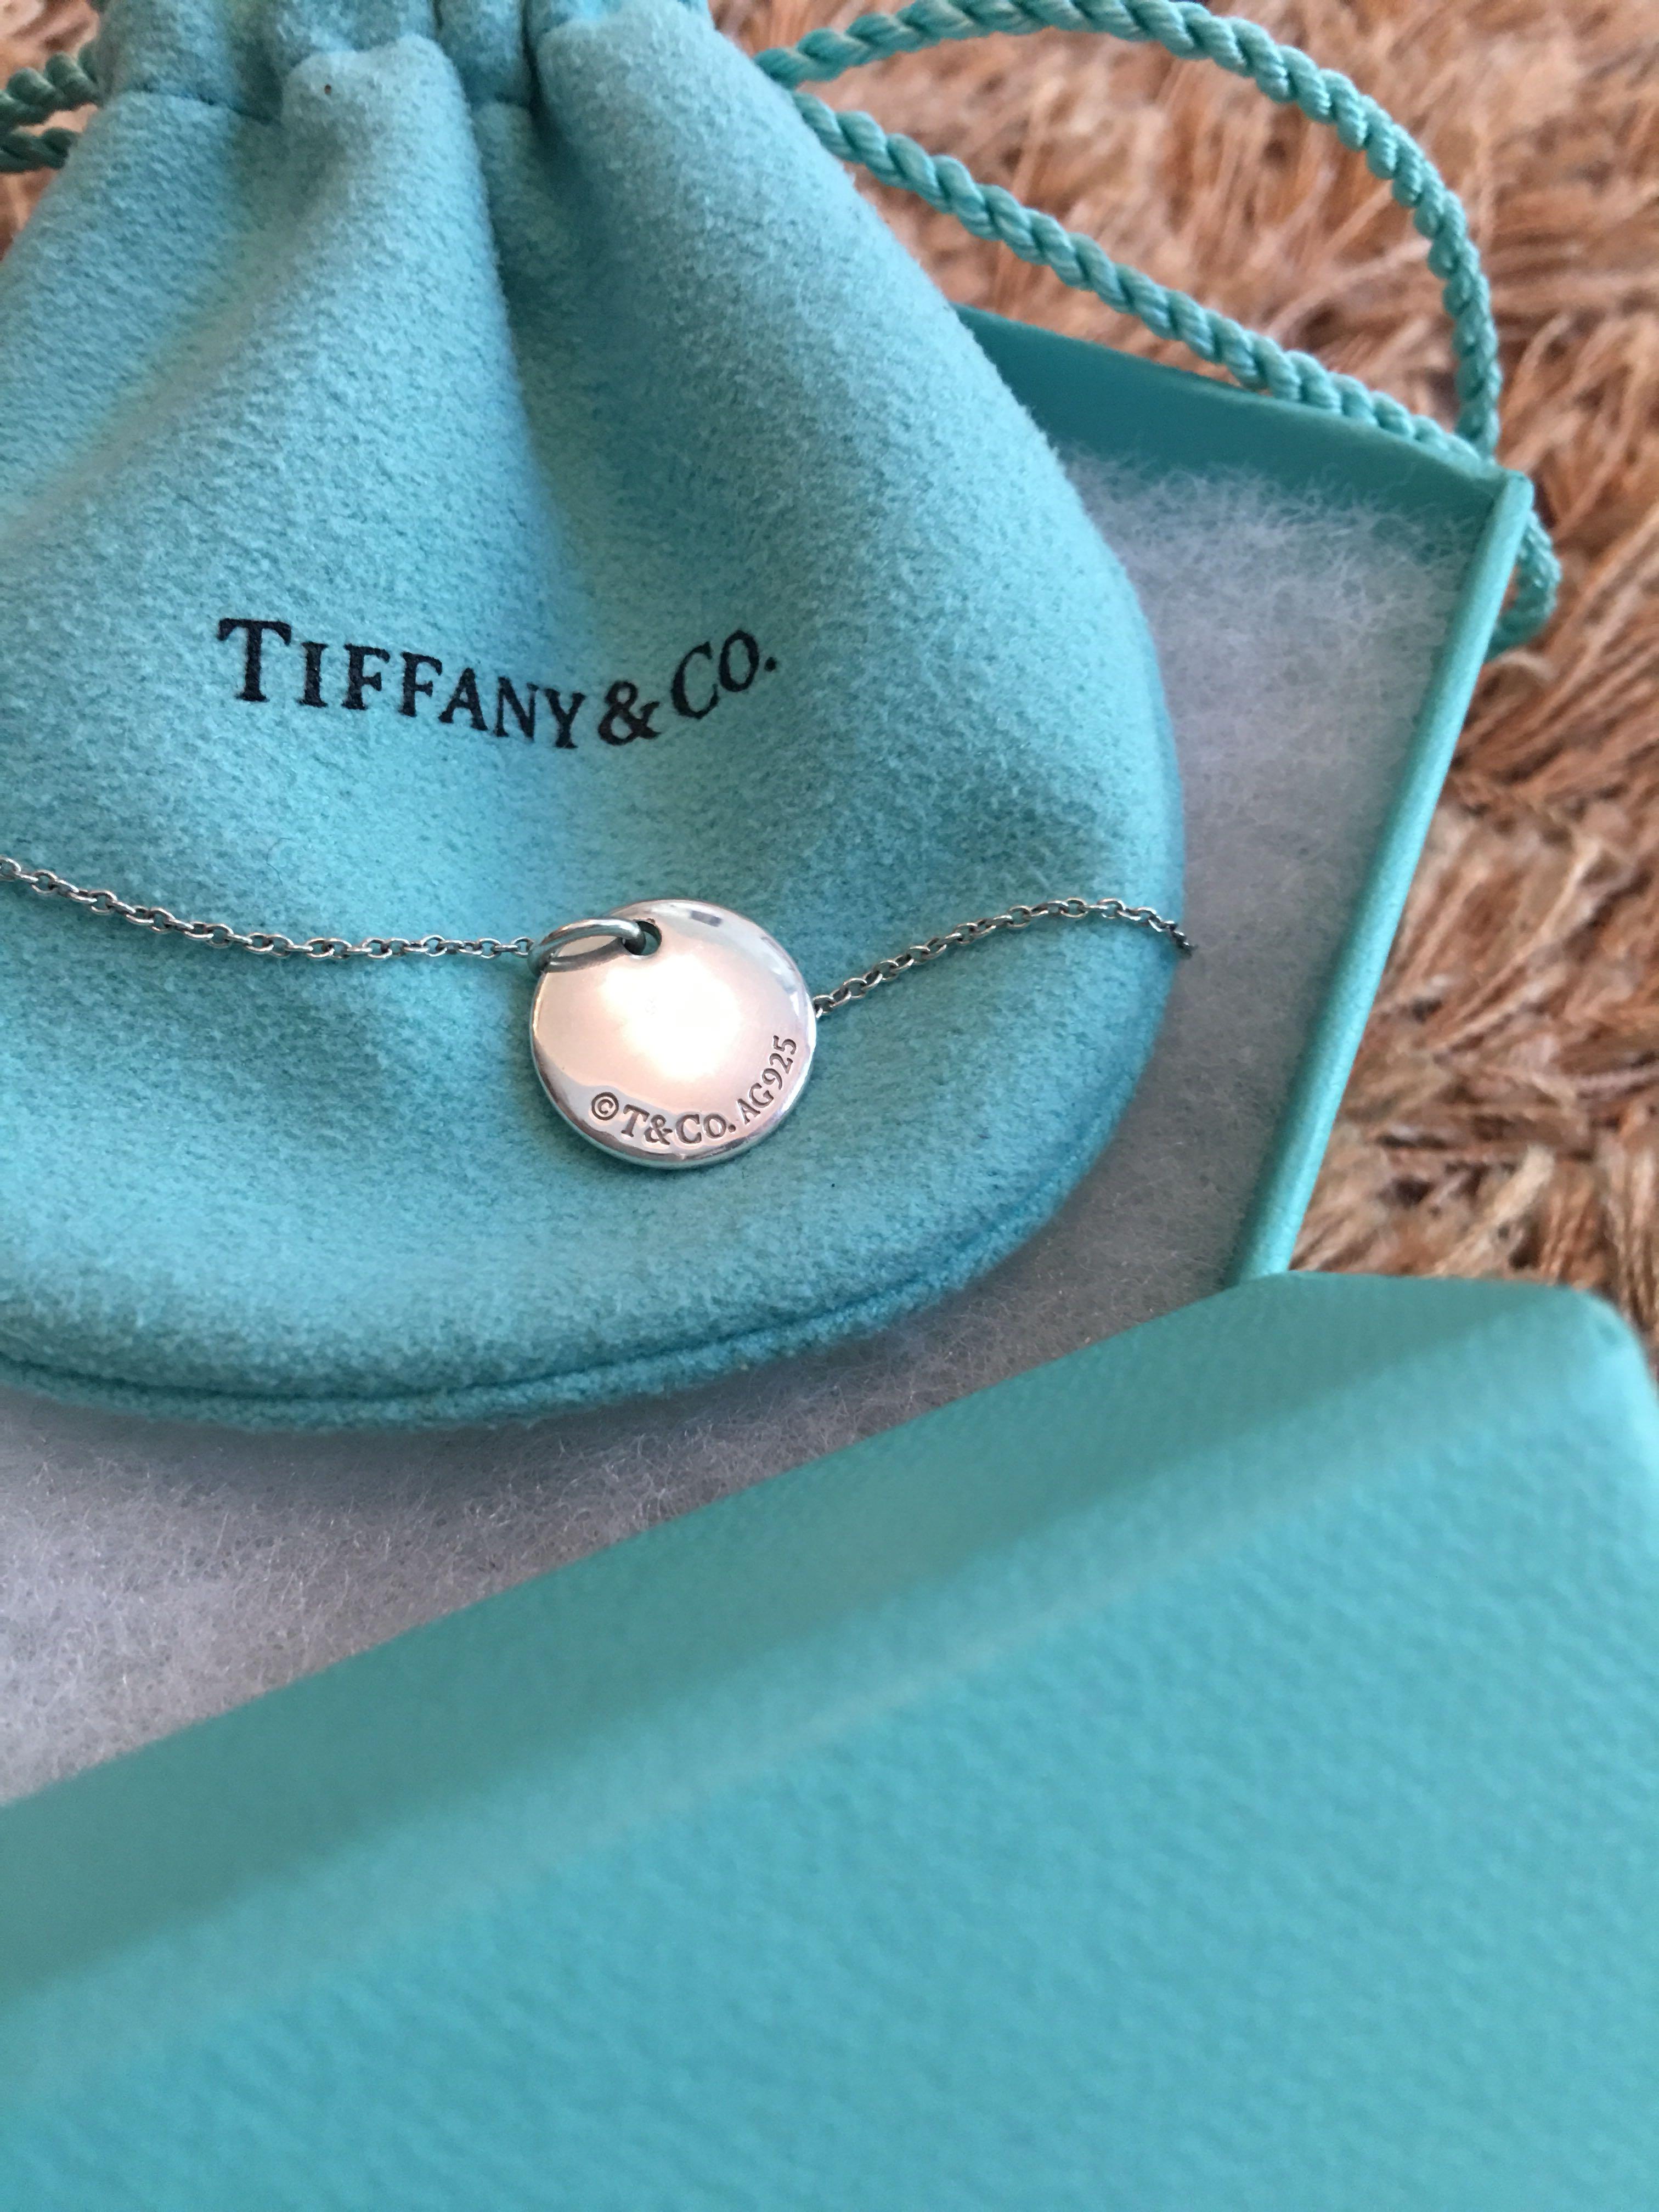 Tiffany & Co. Silver 925 Engraved “XOXO Kate” “11-24-92” Necklace Charm |  eBay